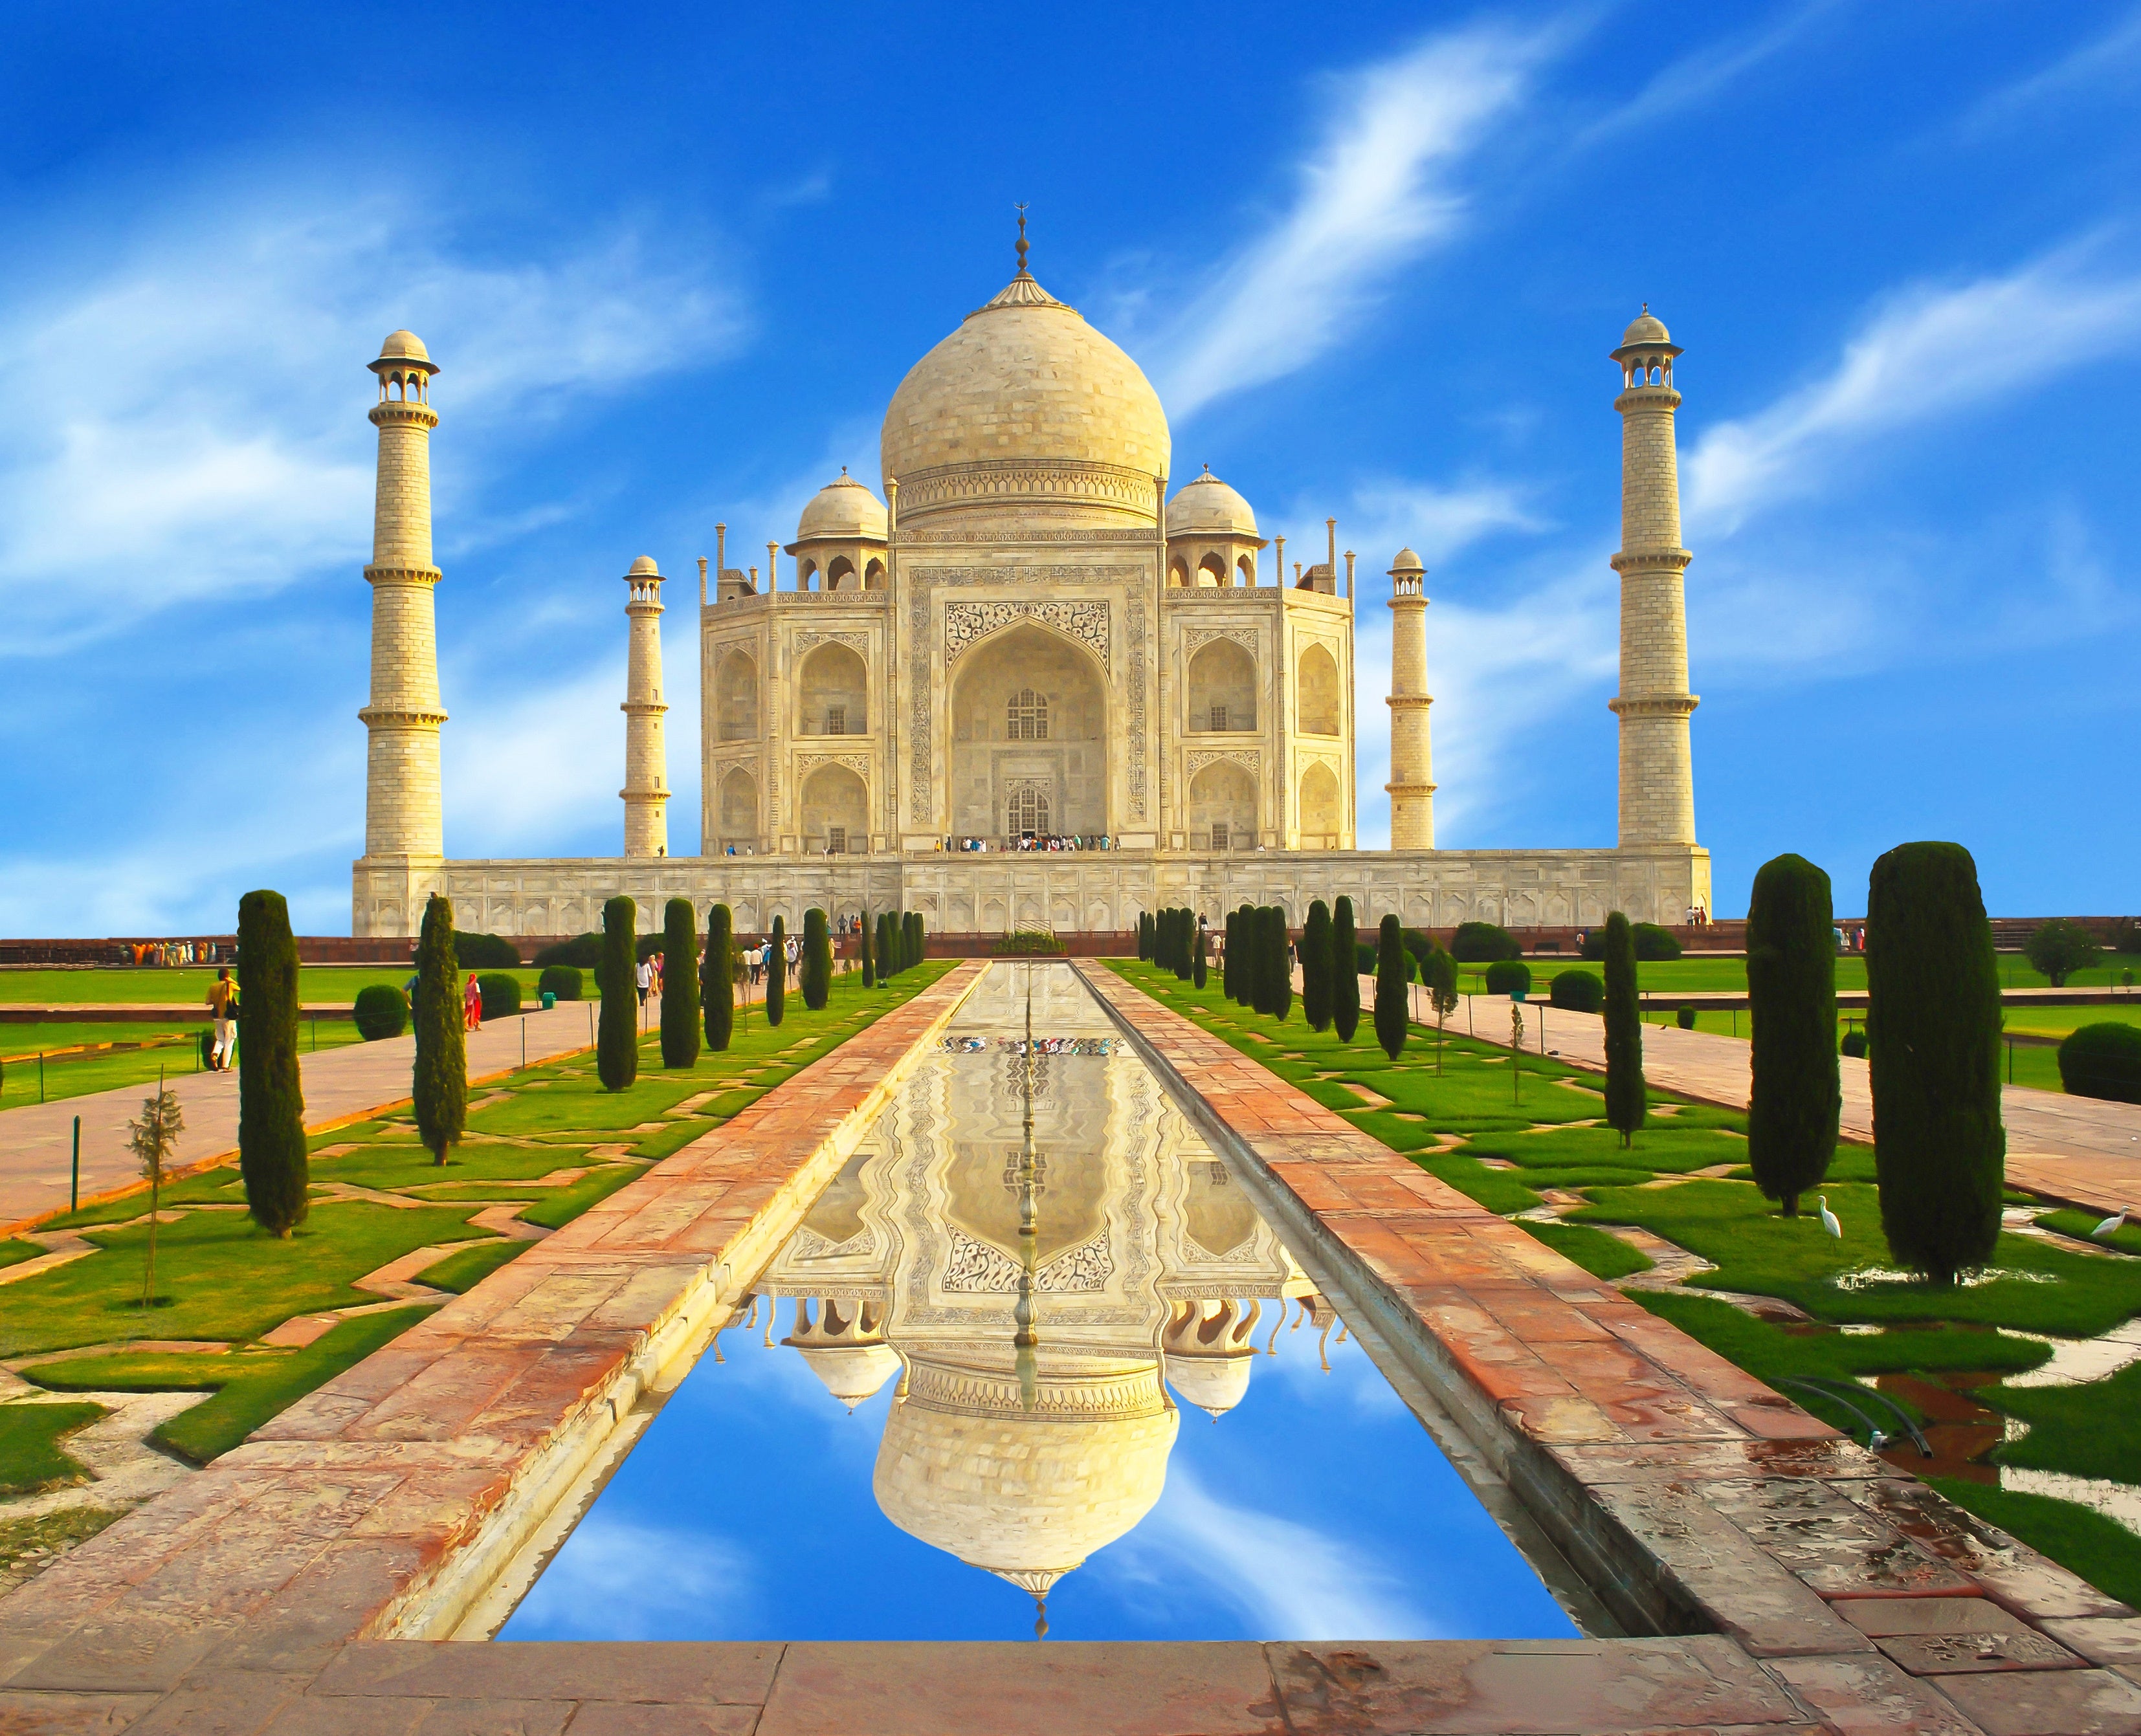 Taj Mahal India 1000 Piece Jigsaw Puzzle